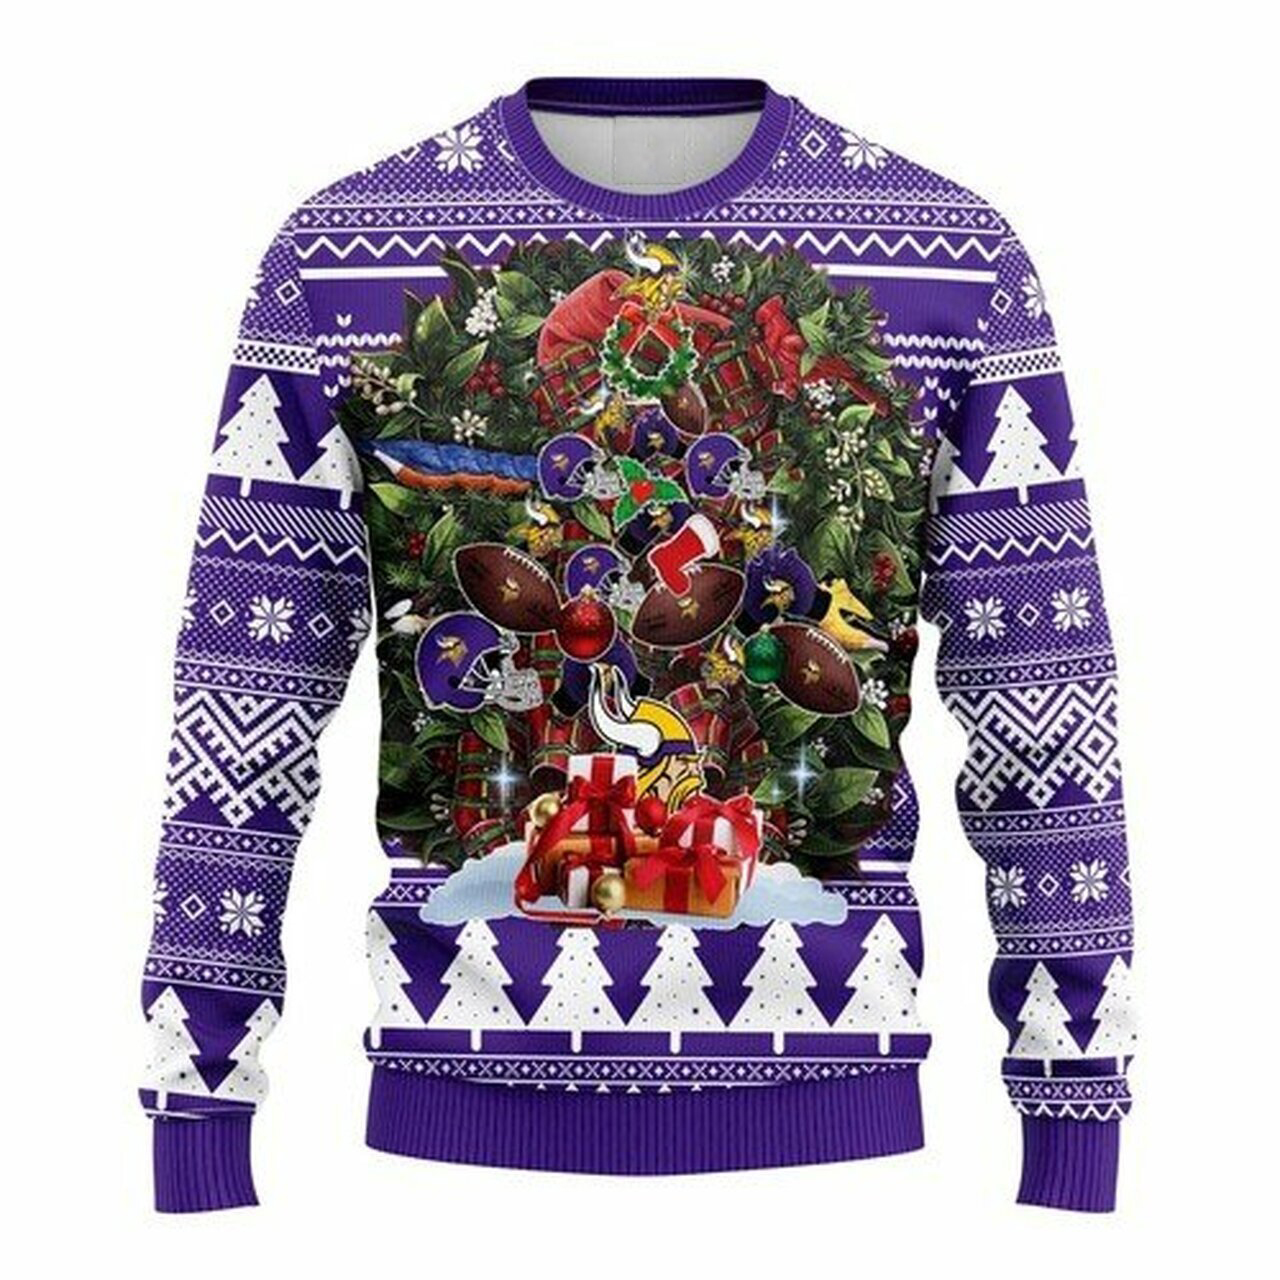 NFL Minnesota Vikings christmas tree ugly sweater